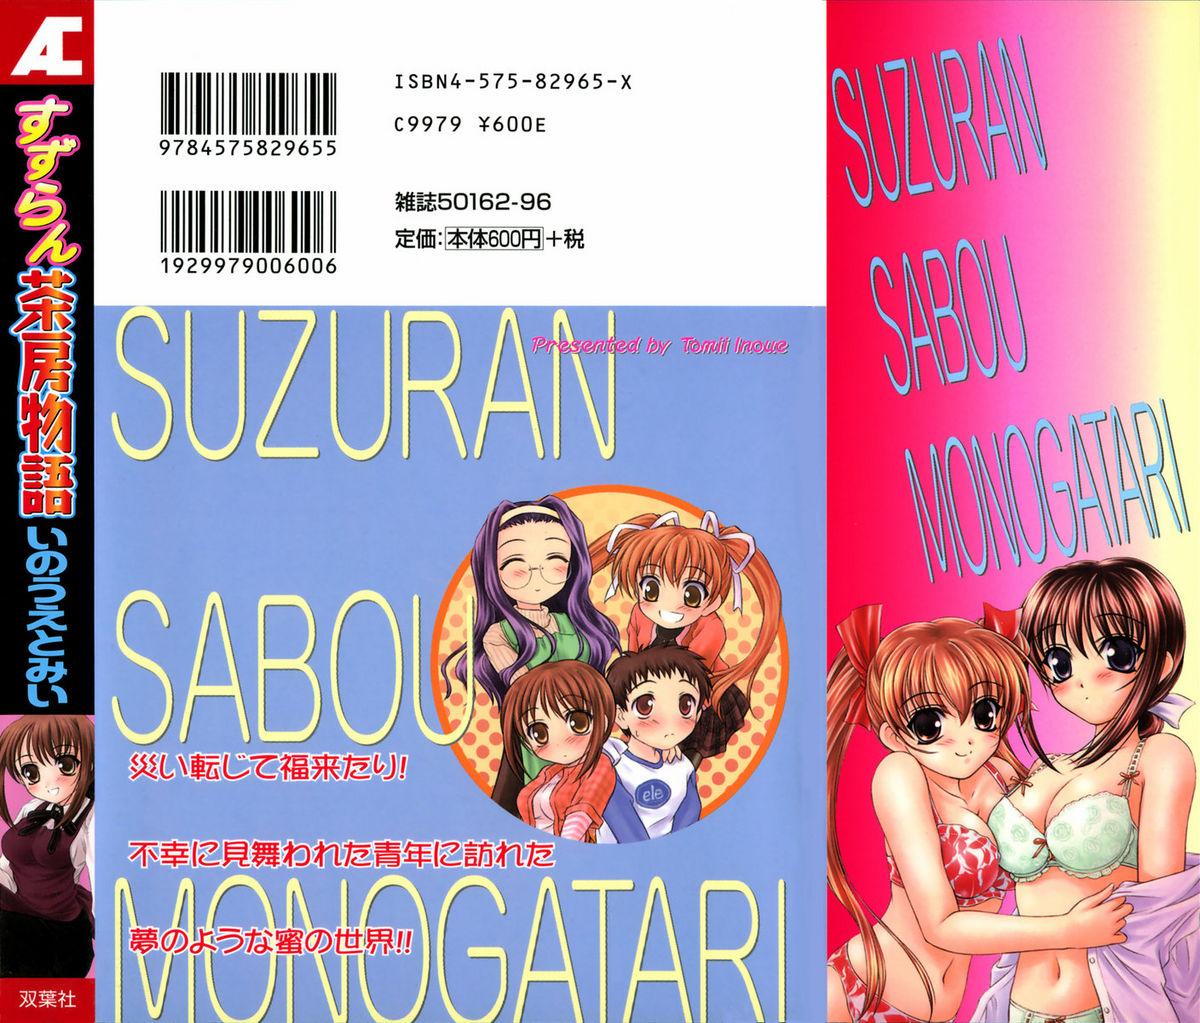 Suzuran Sabou Monogatari - May Lily Cafe Story 200